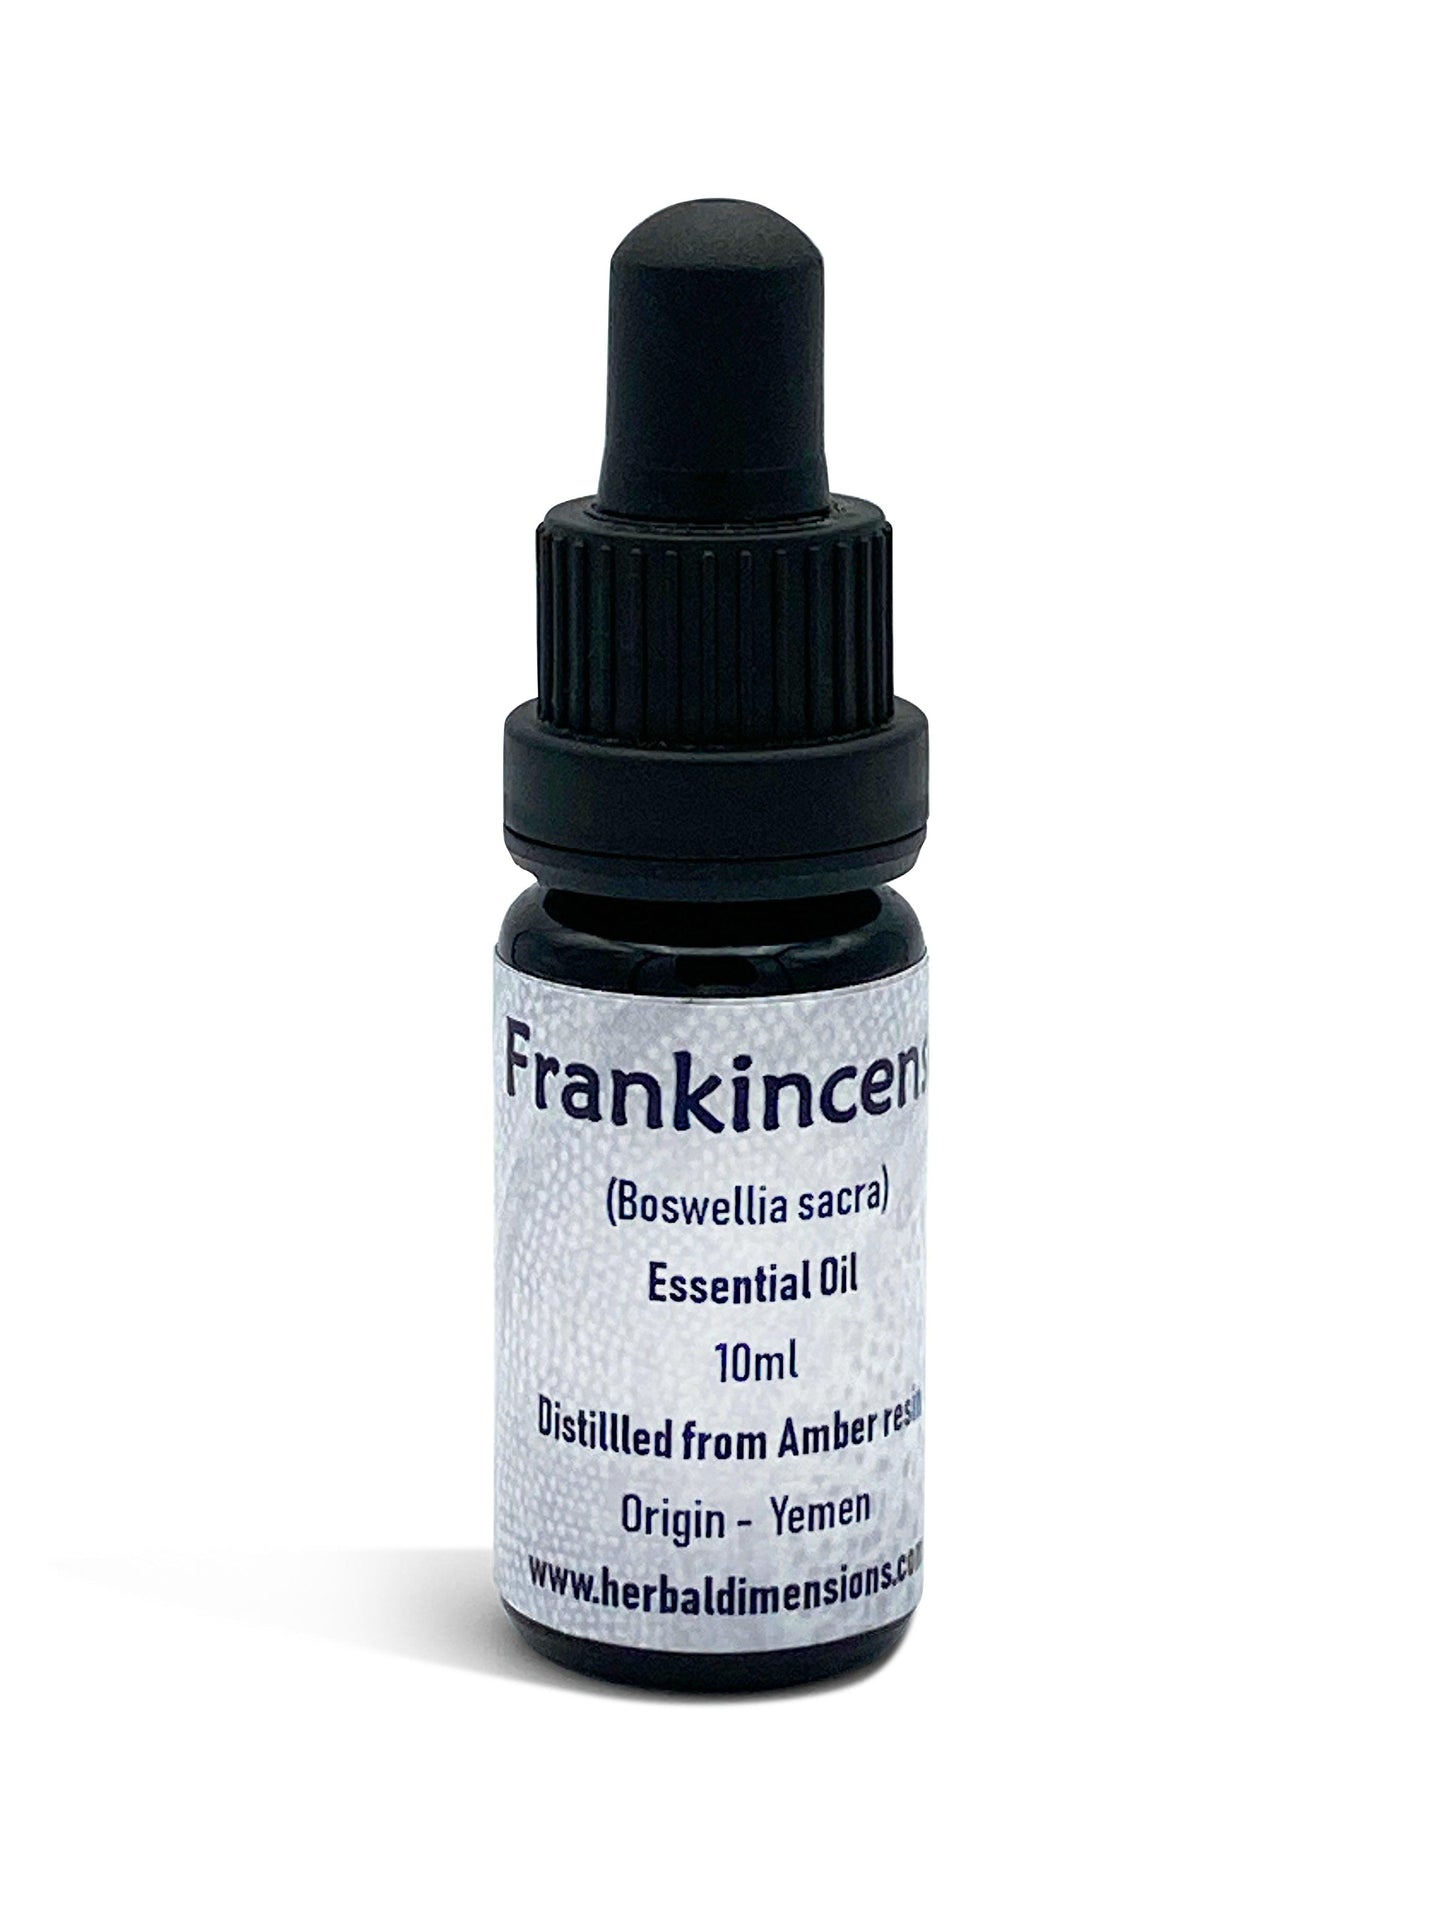 Frankincense Essential Oil - Herbaldimensions.com